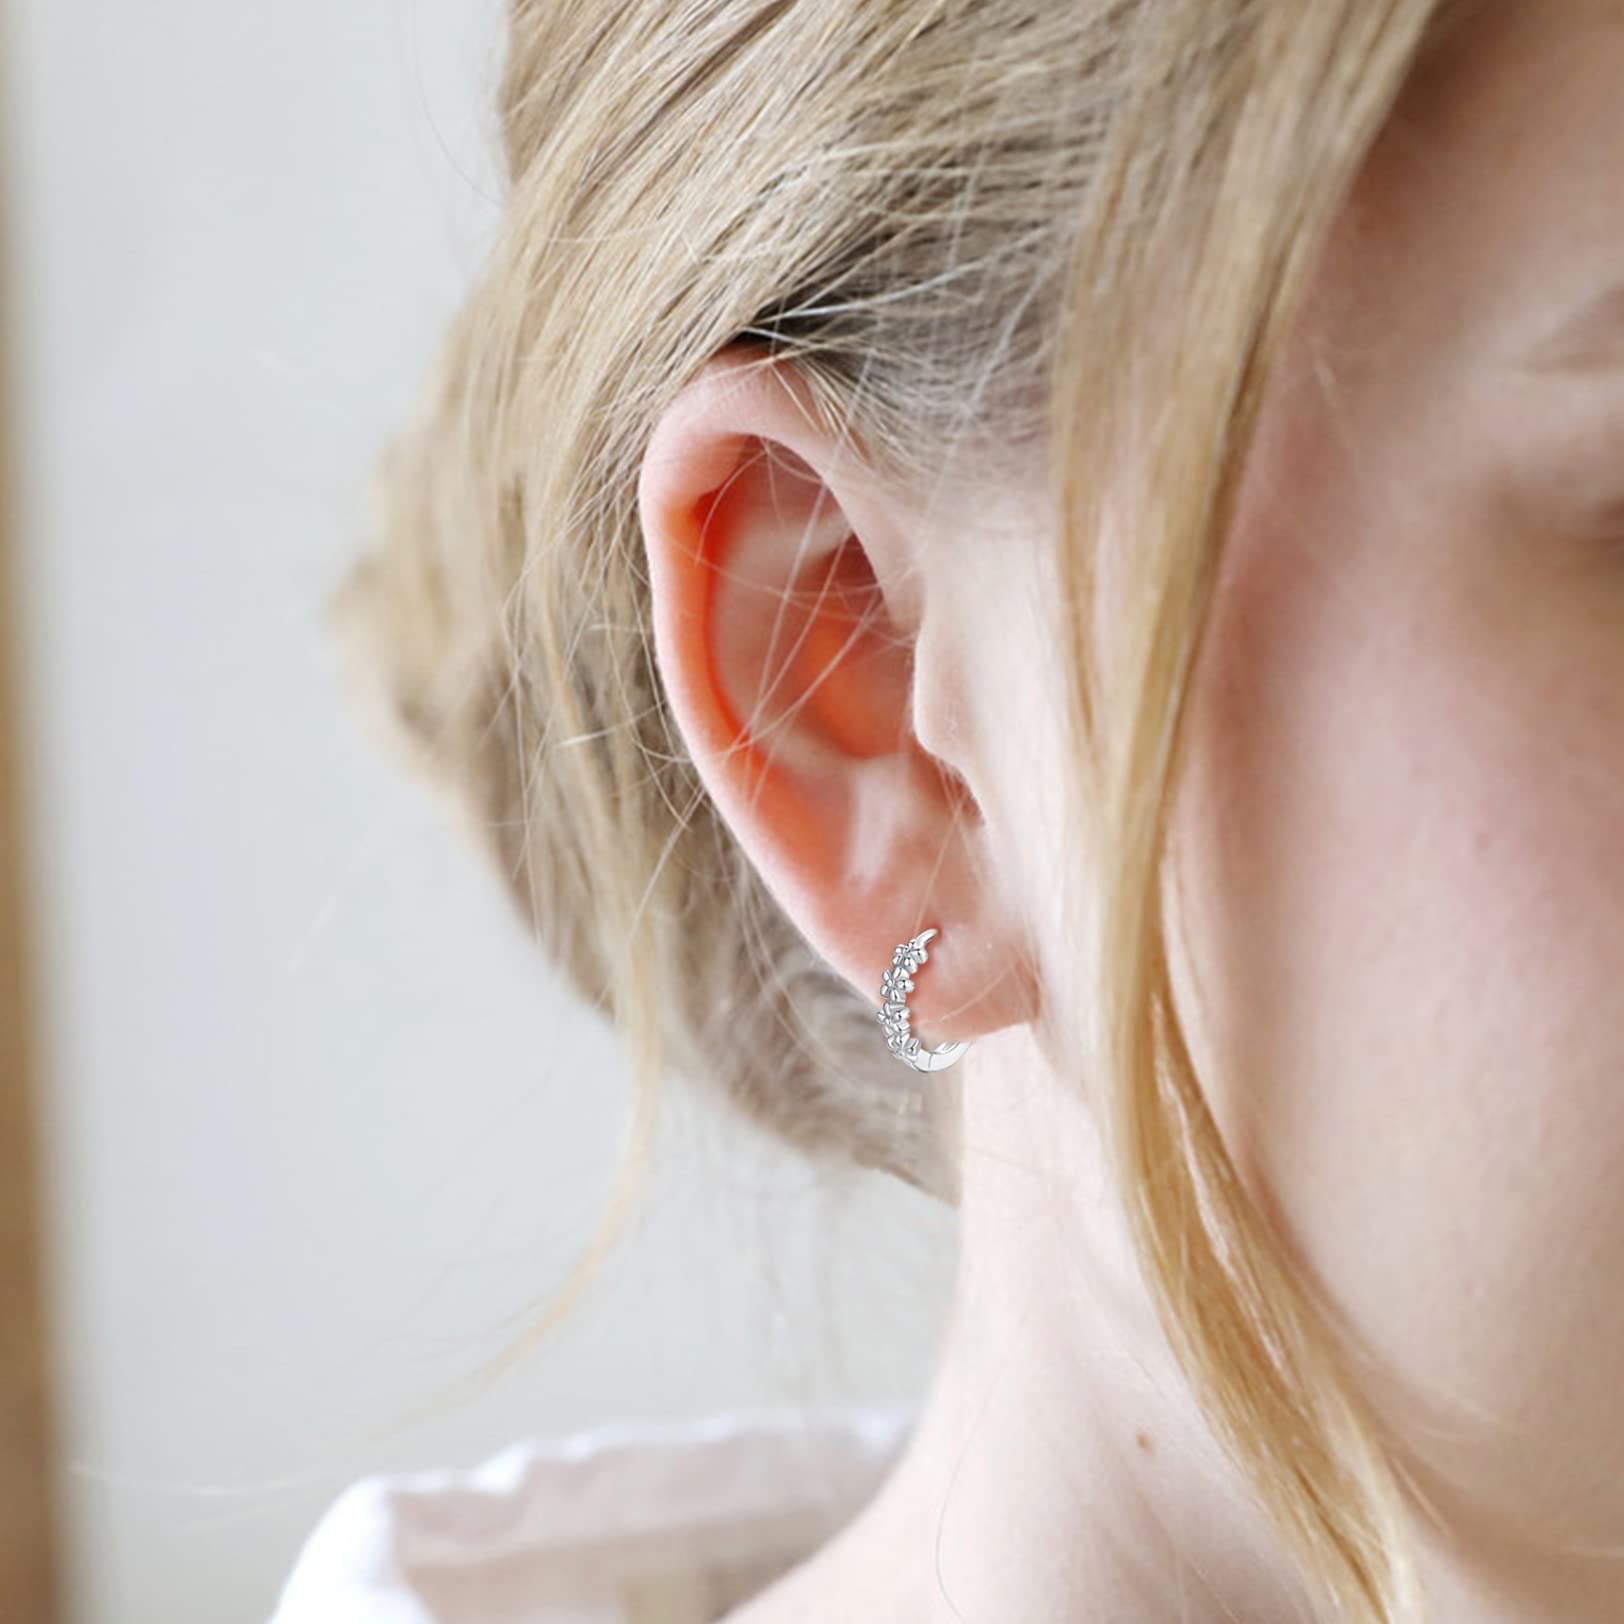 Small Hoop Earrings for Women Girls |925 Sterling Silver Post 10mm Flower Cluster Huggie Hoop Earrings, Hypoallergenic Cartilage Piercing Hoops Jewelry